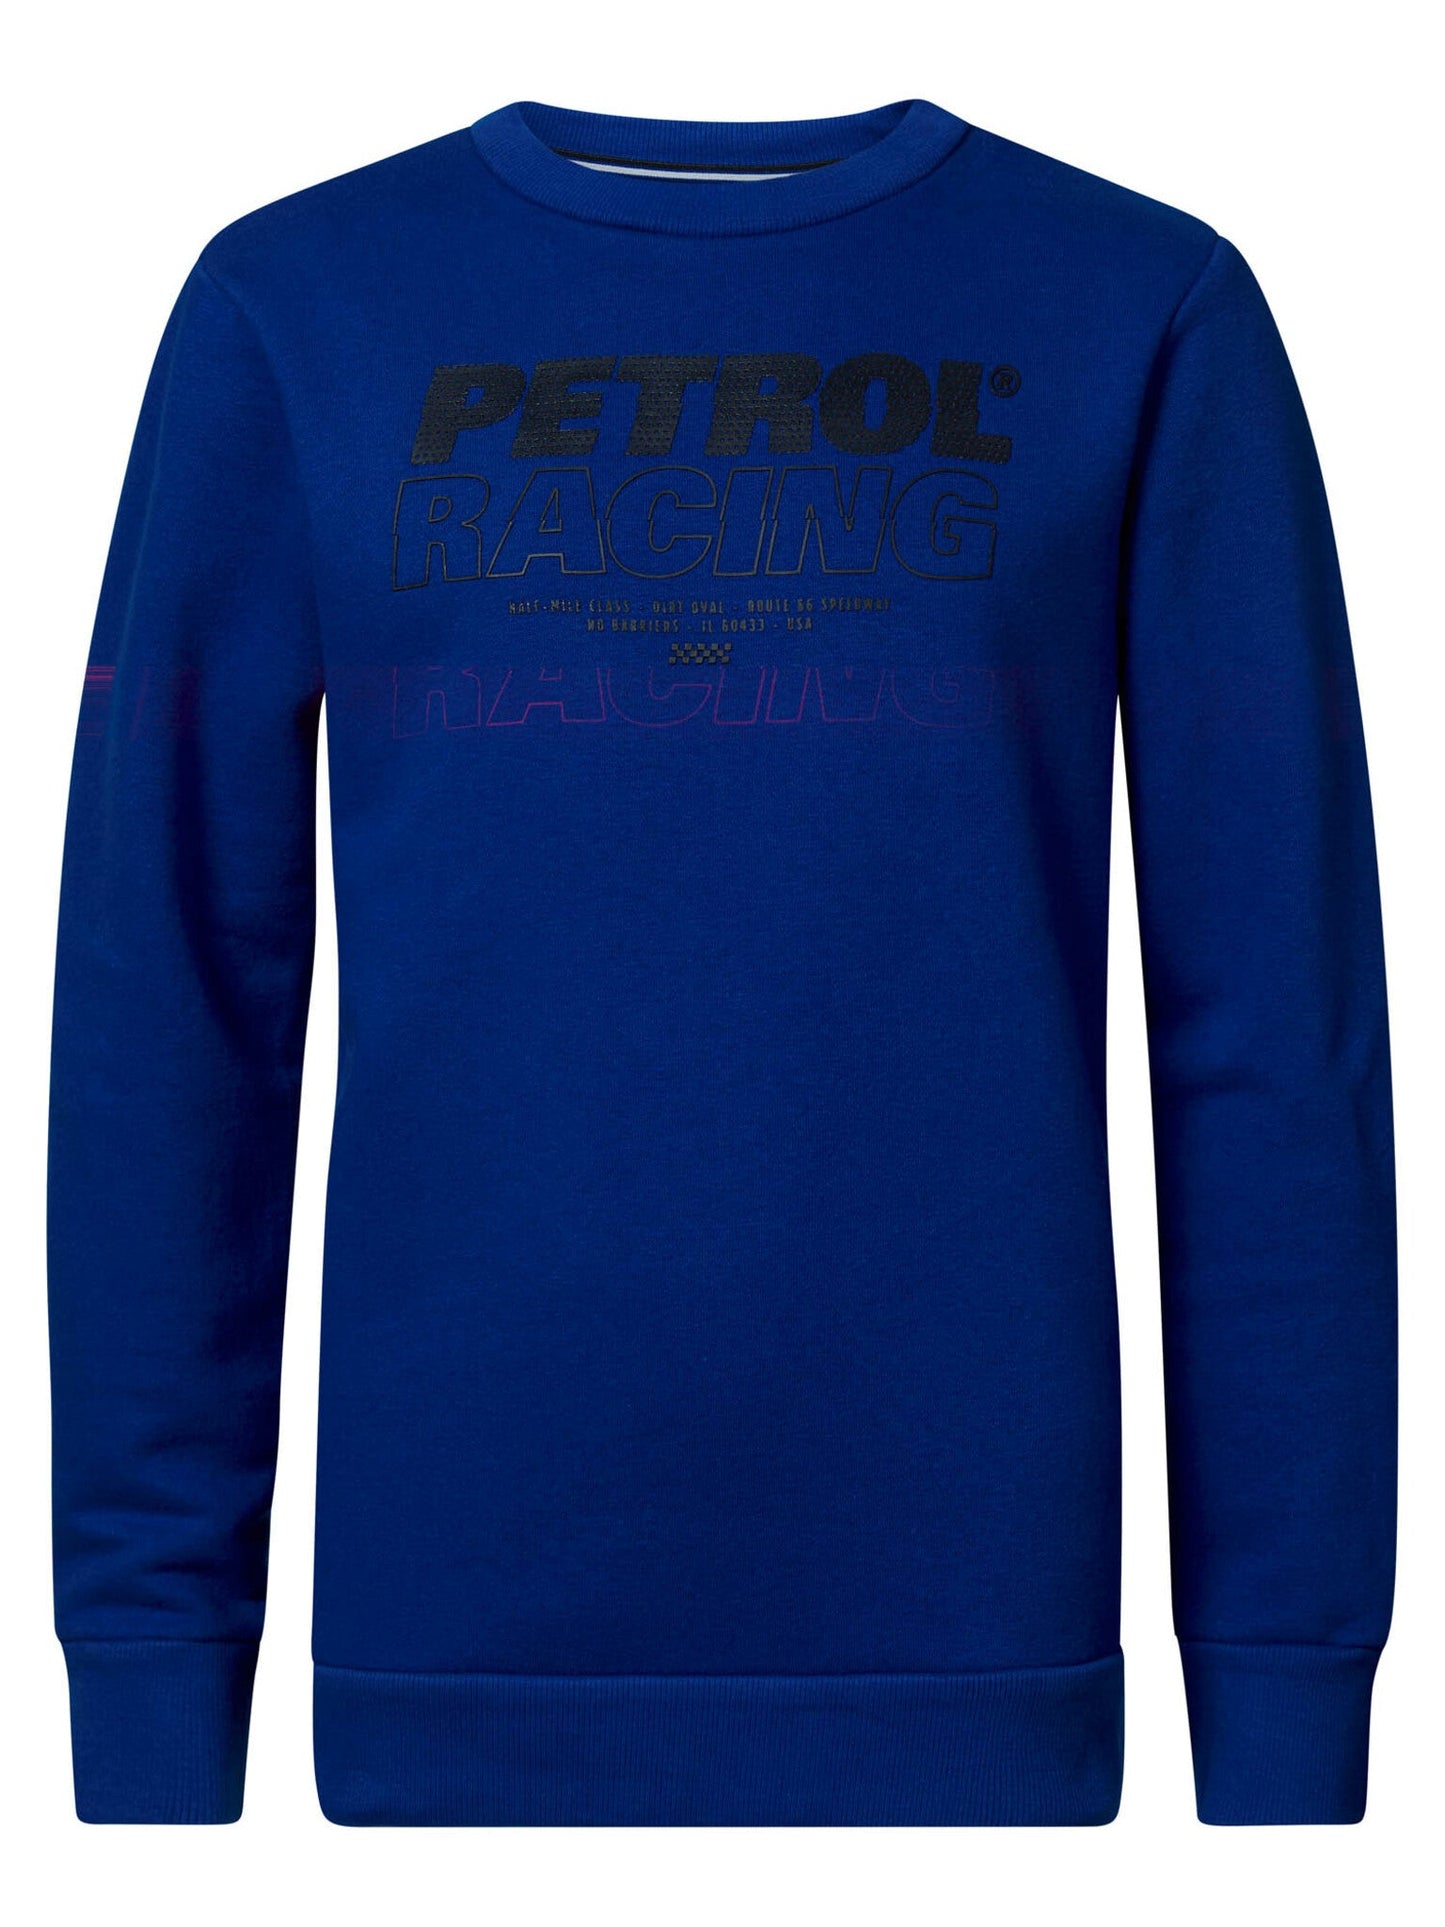 Petrol Industries Boys Crew Sweatshirt - Matt O'Brien Fashions